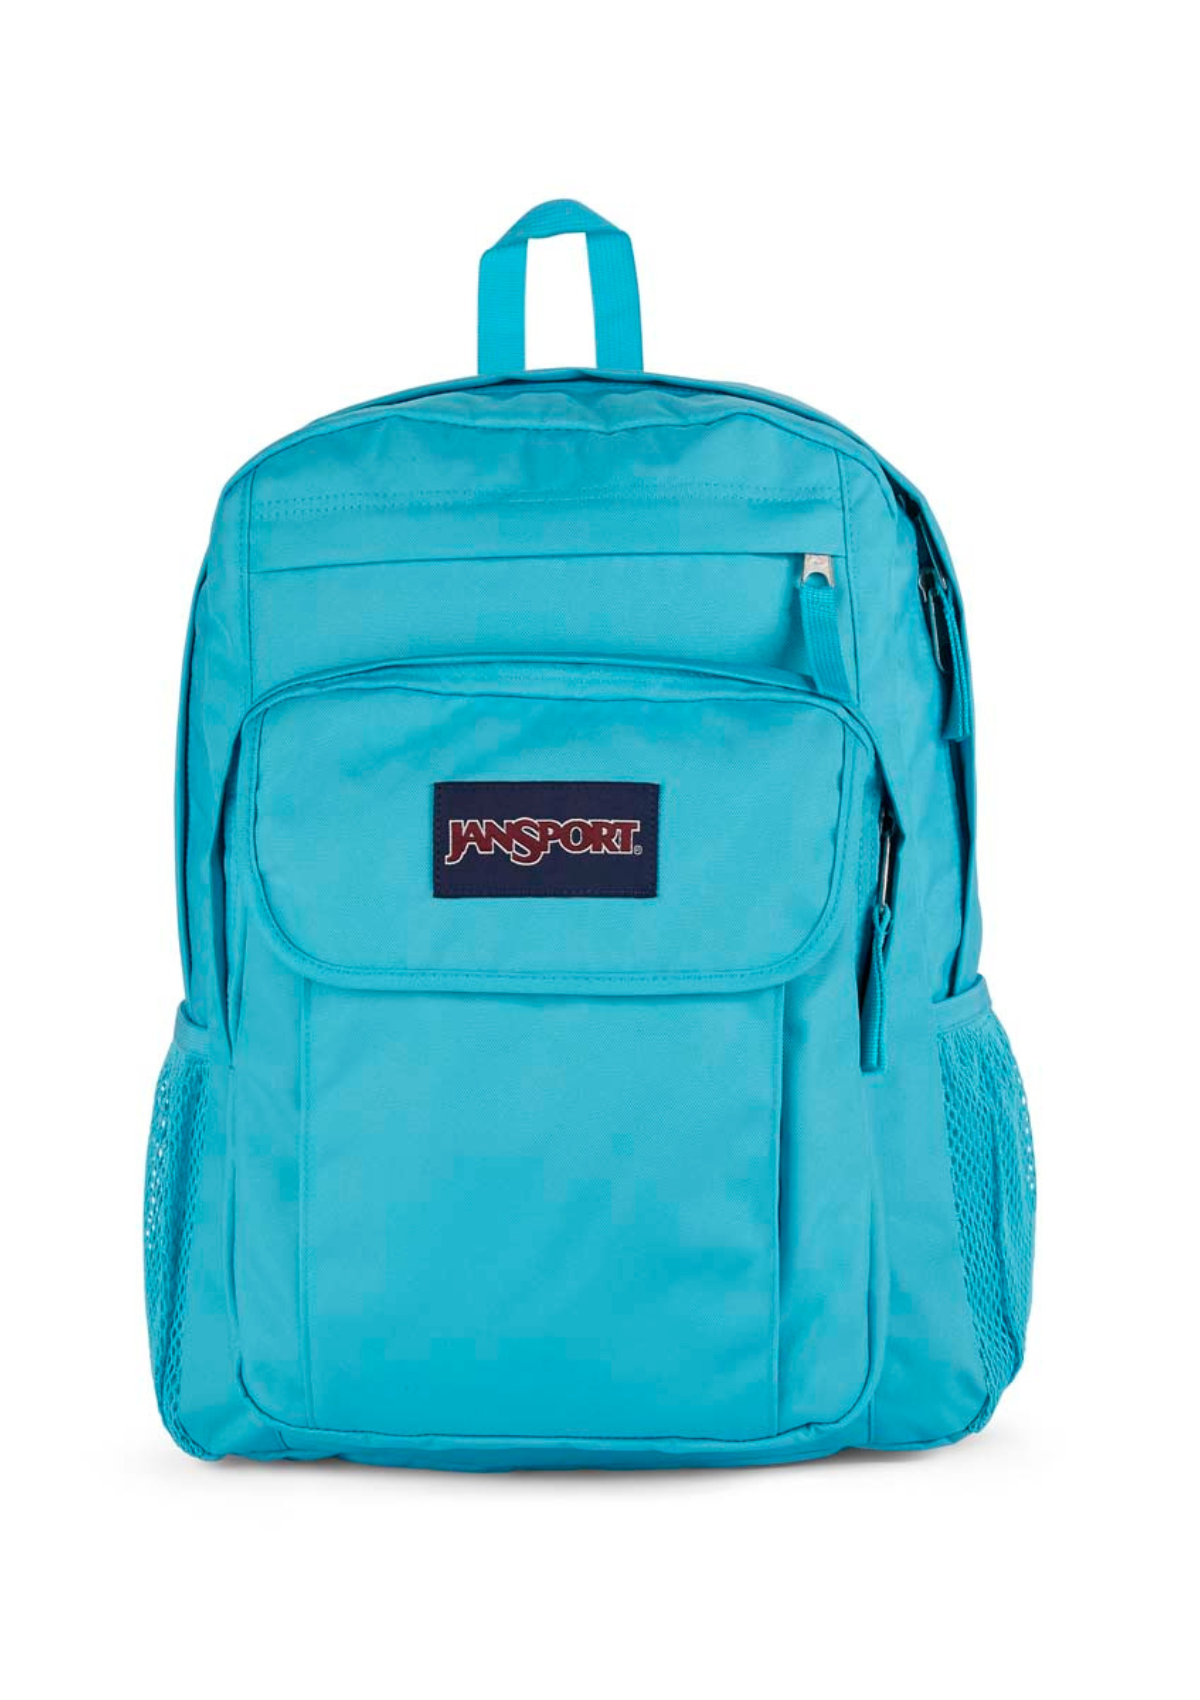 JanSport Backpacks Union Pack Scuba